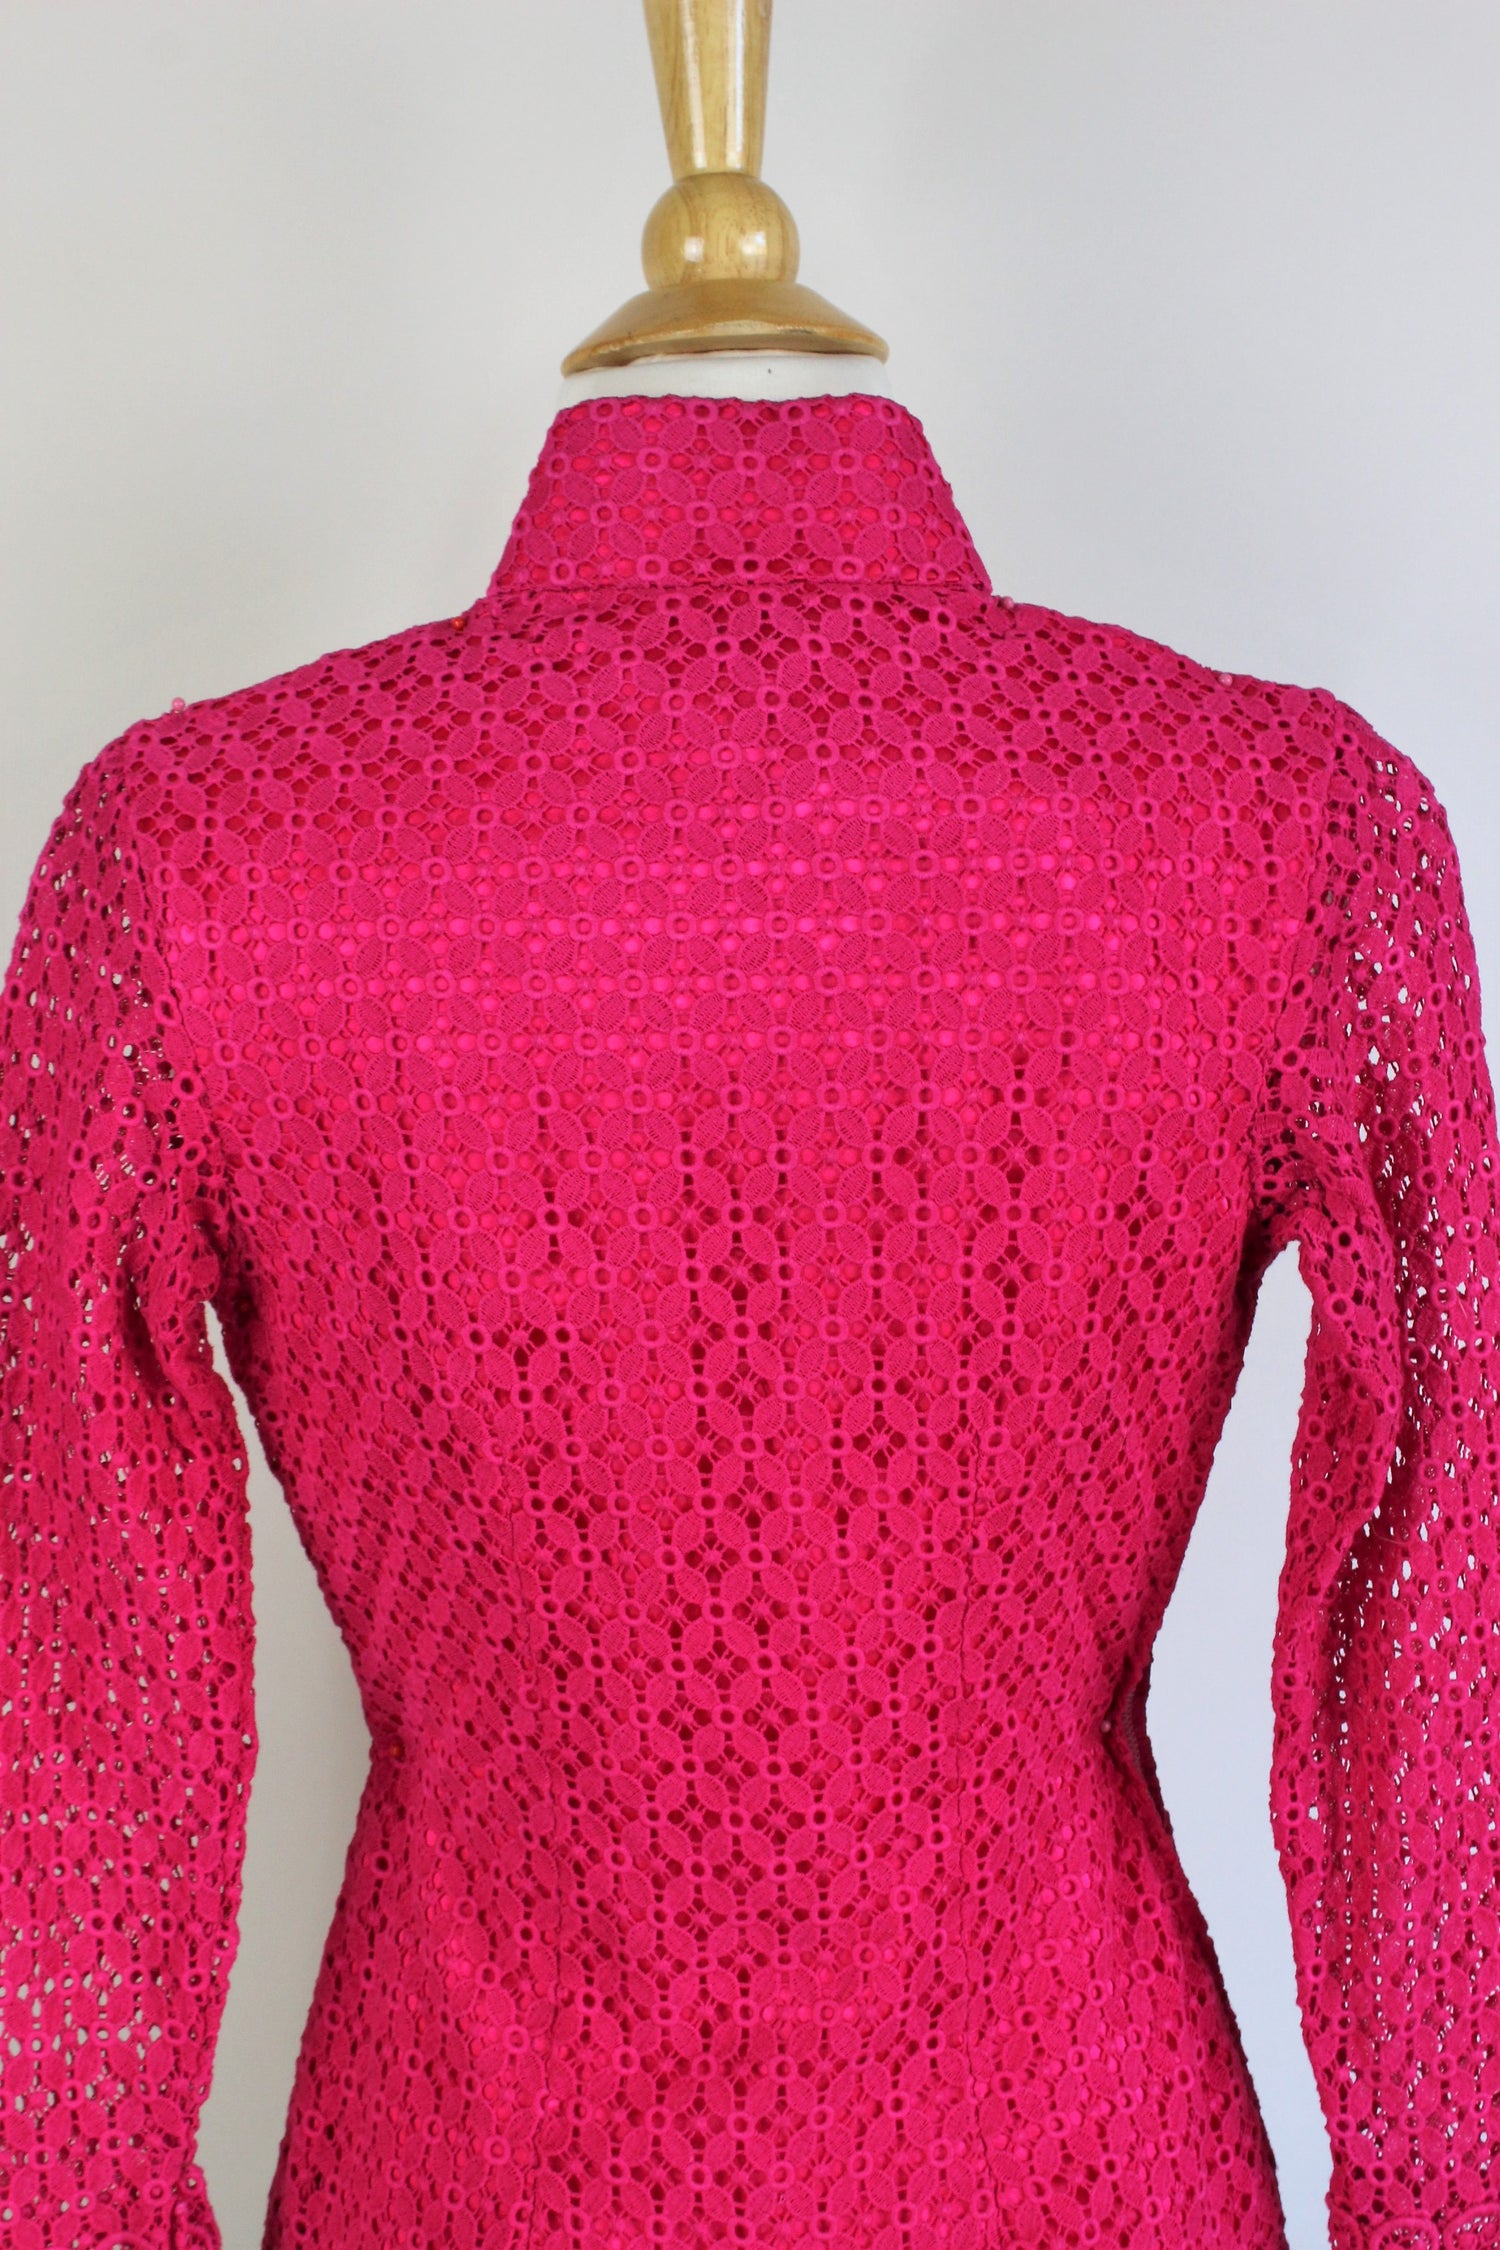 Vintage 1960s Raspberry Pink Crochet Lace Cheongsam Dress